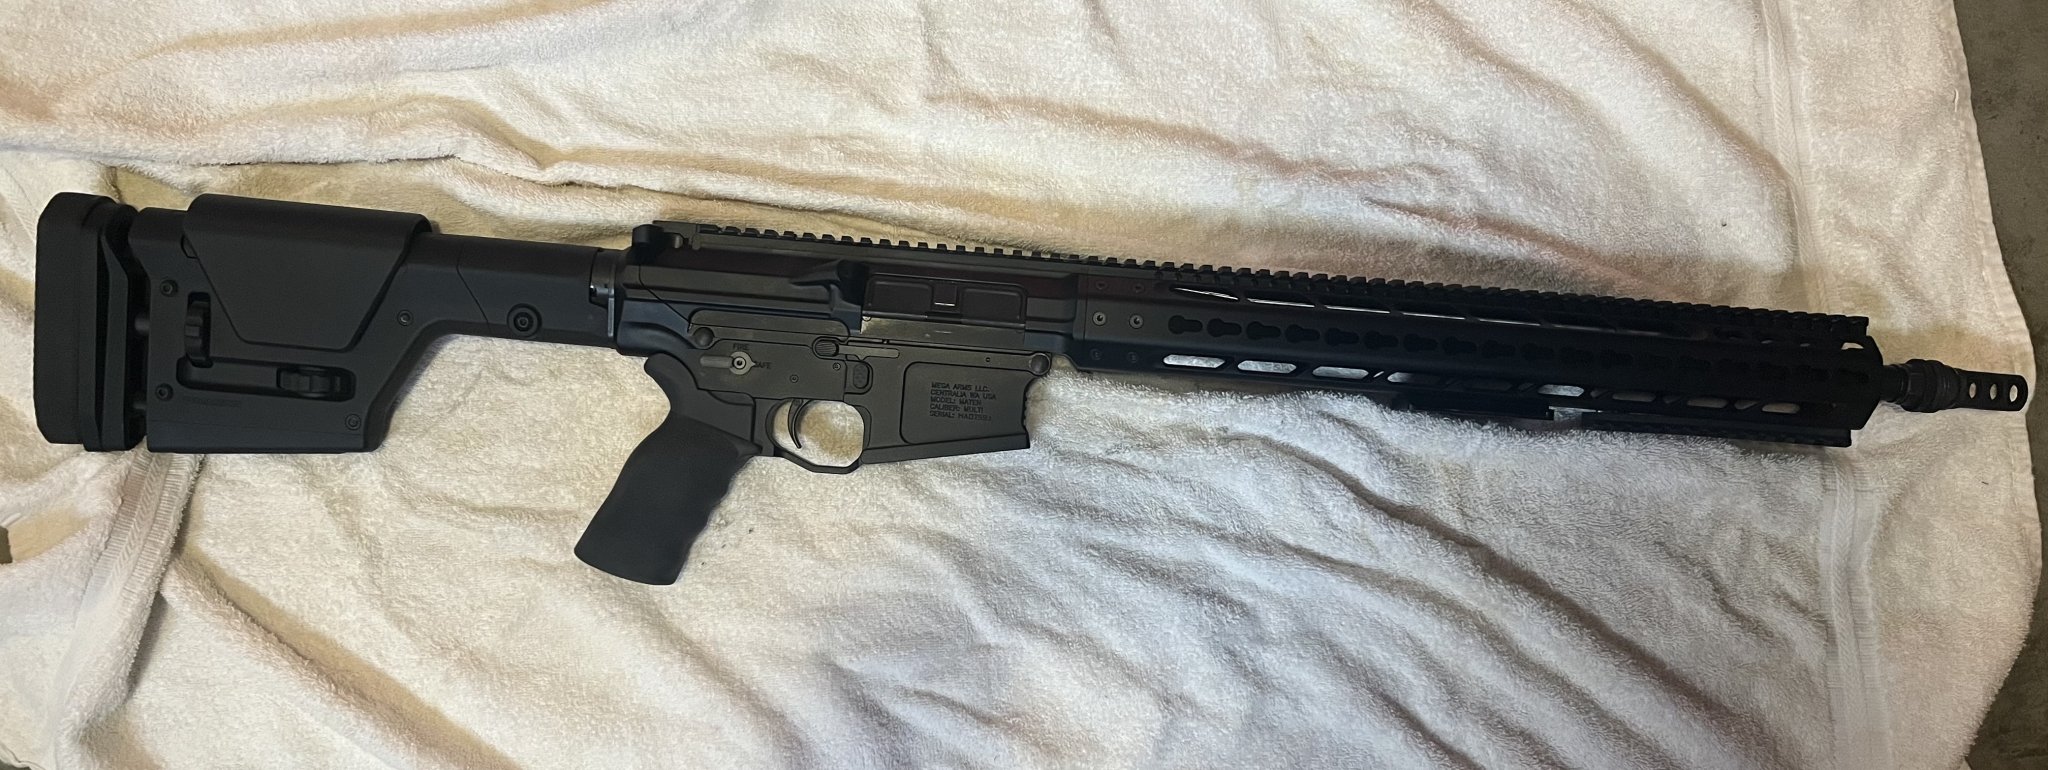 Firearms - WTS: Mega Arms/JP AR10 .308 | Sniper's Hide Forum